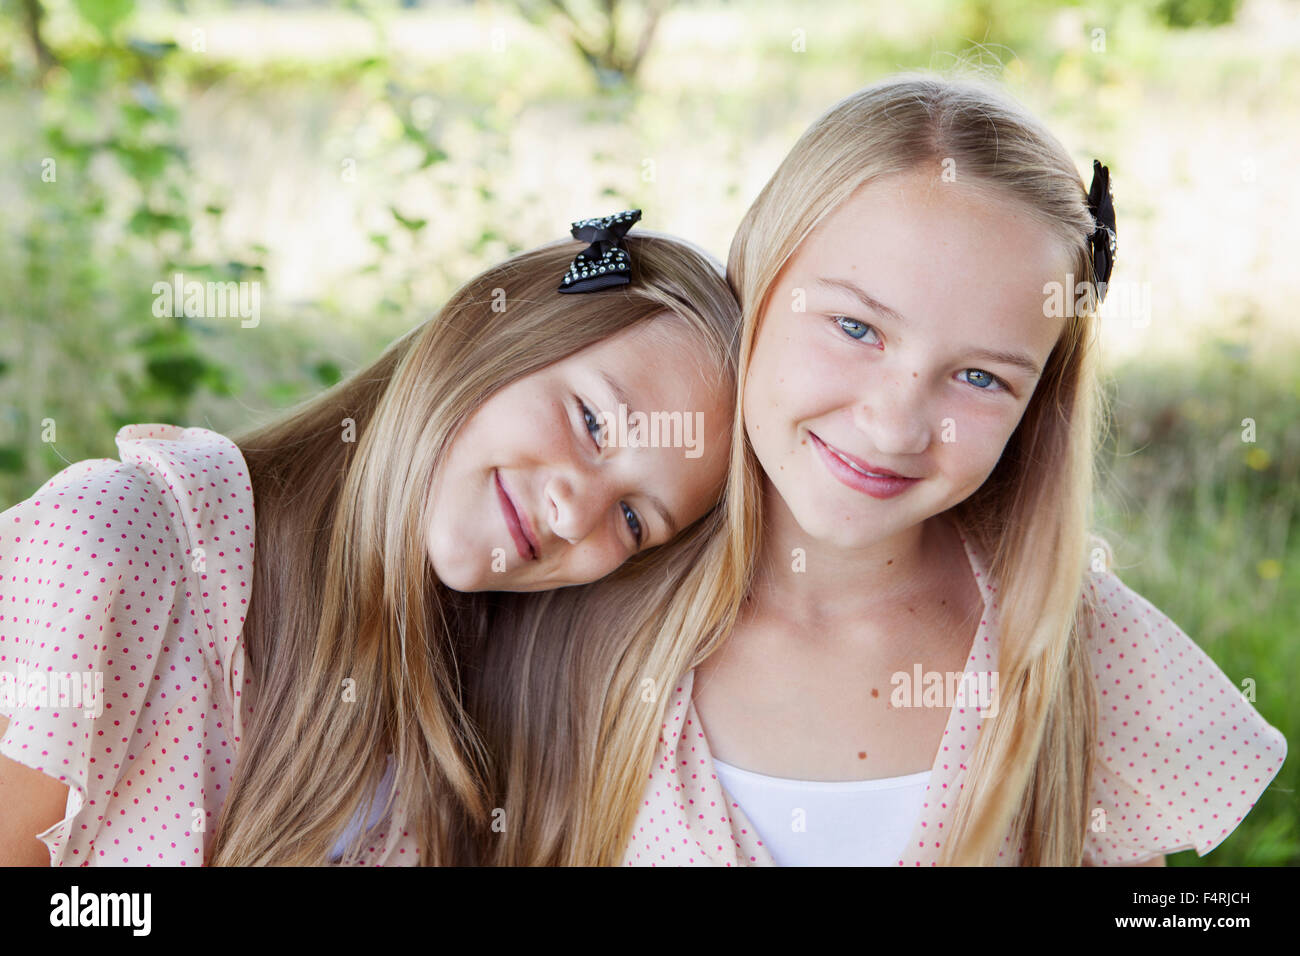 Sweden, Gotland, Eksta, Portrait of two girls (12-13 years) smiling Stock Photo